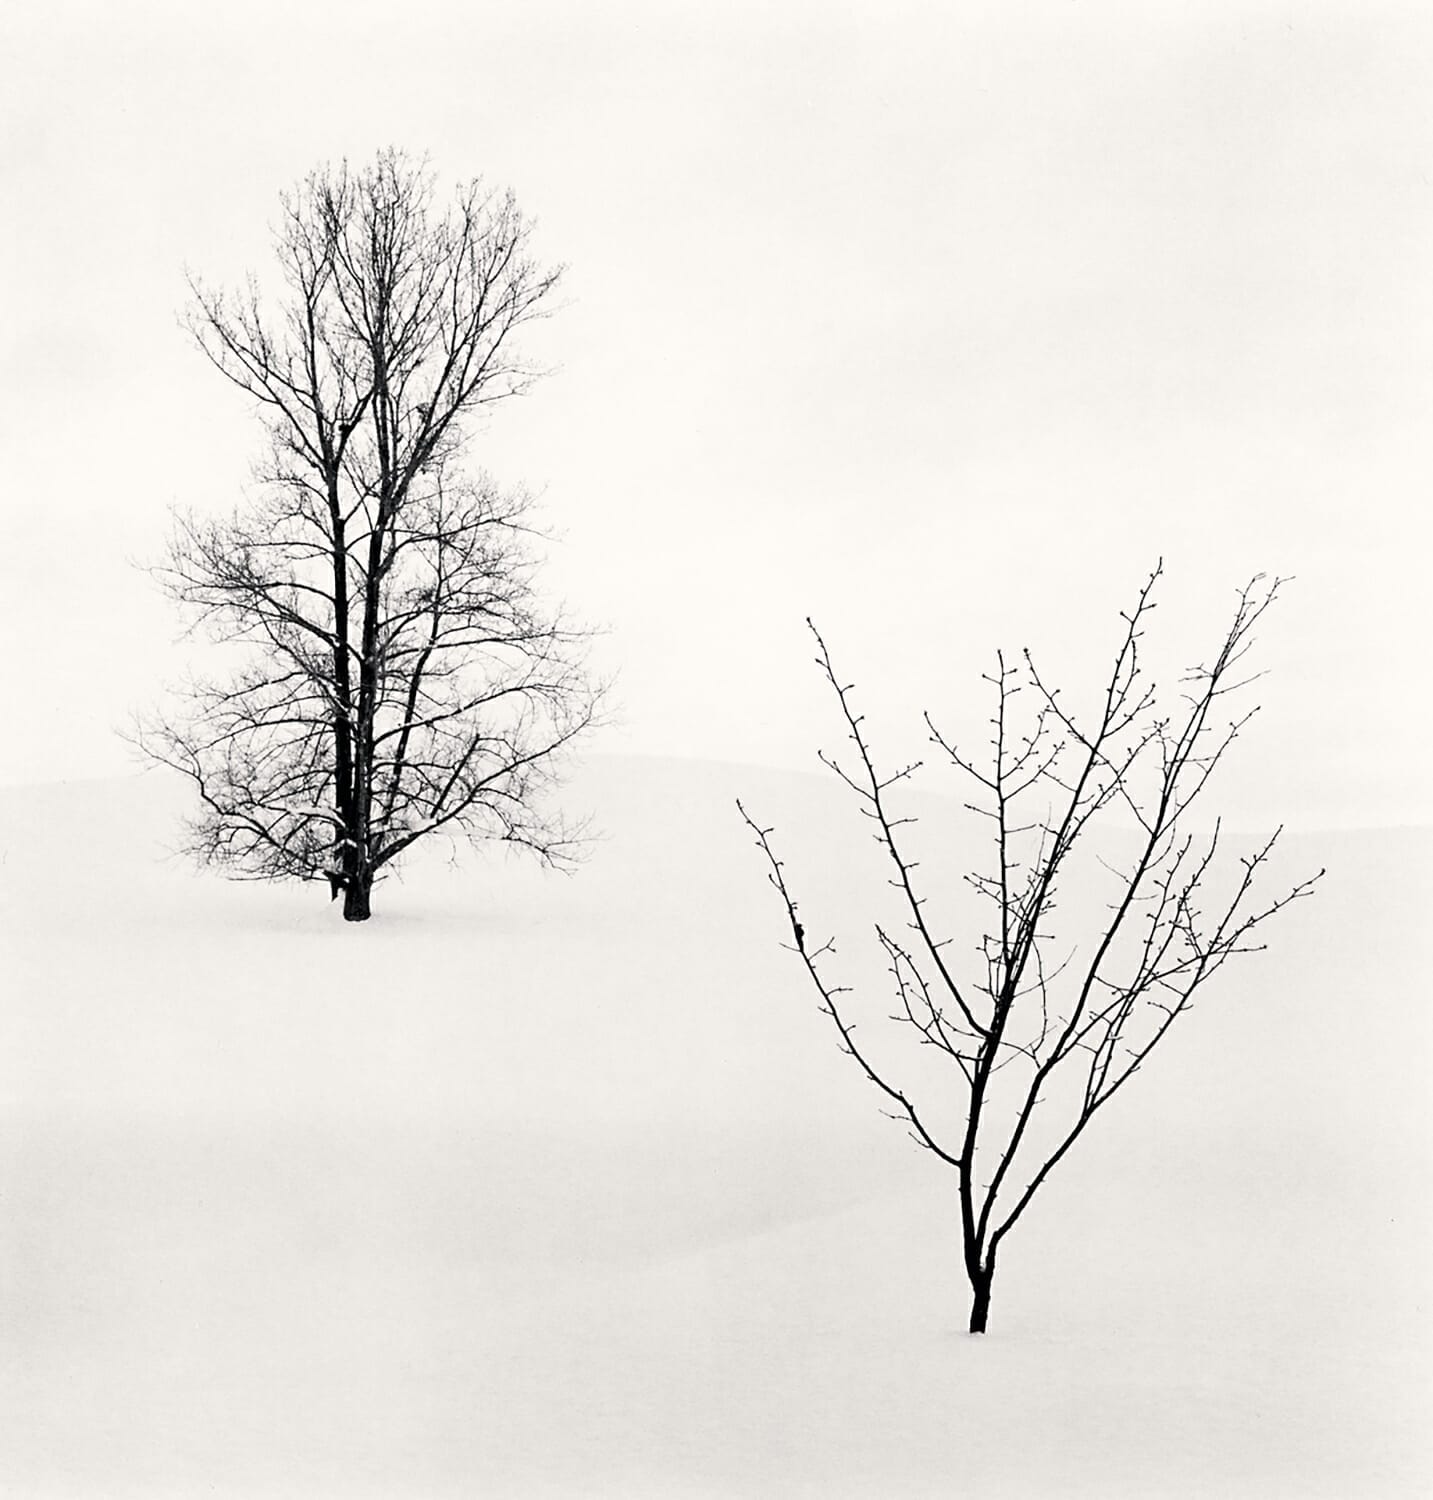 Two Trees in Snow, Biei, Hokkaido, Japan